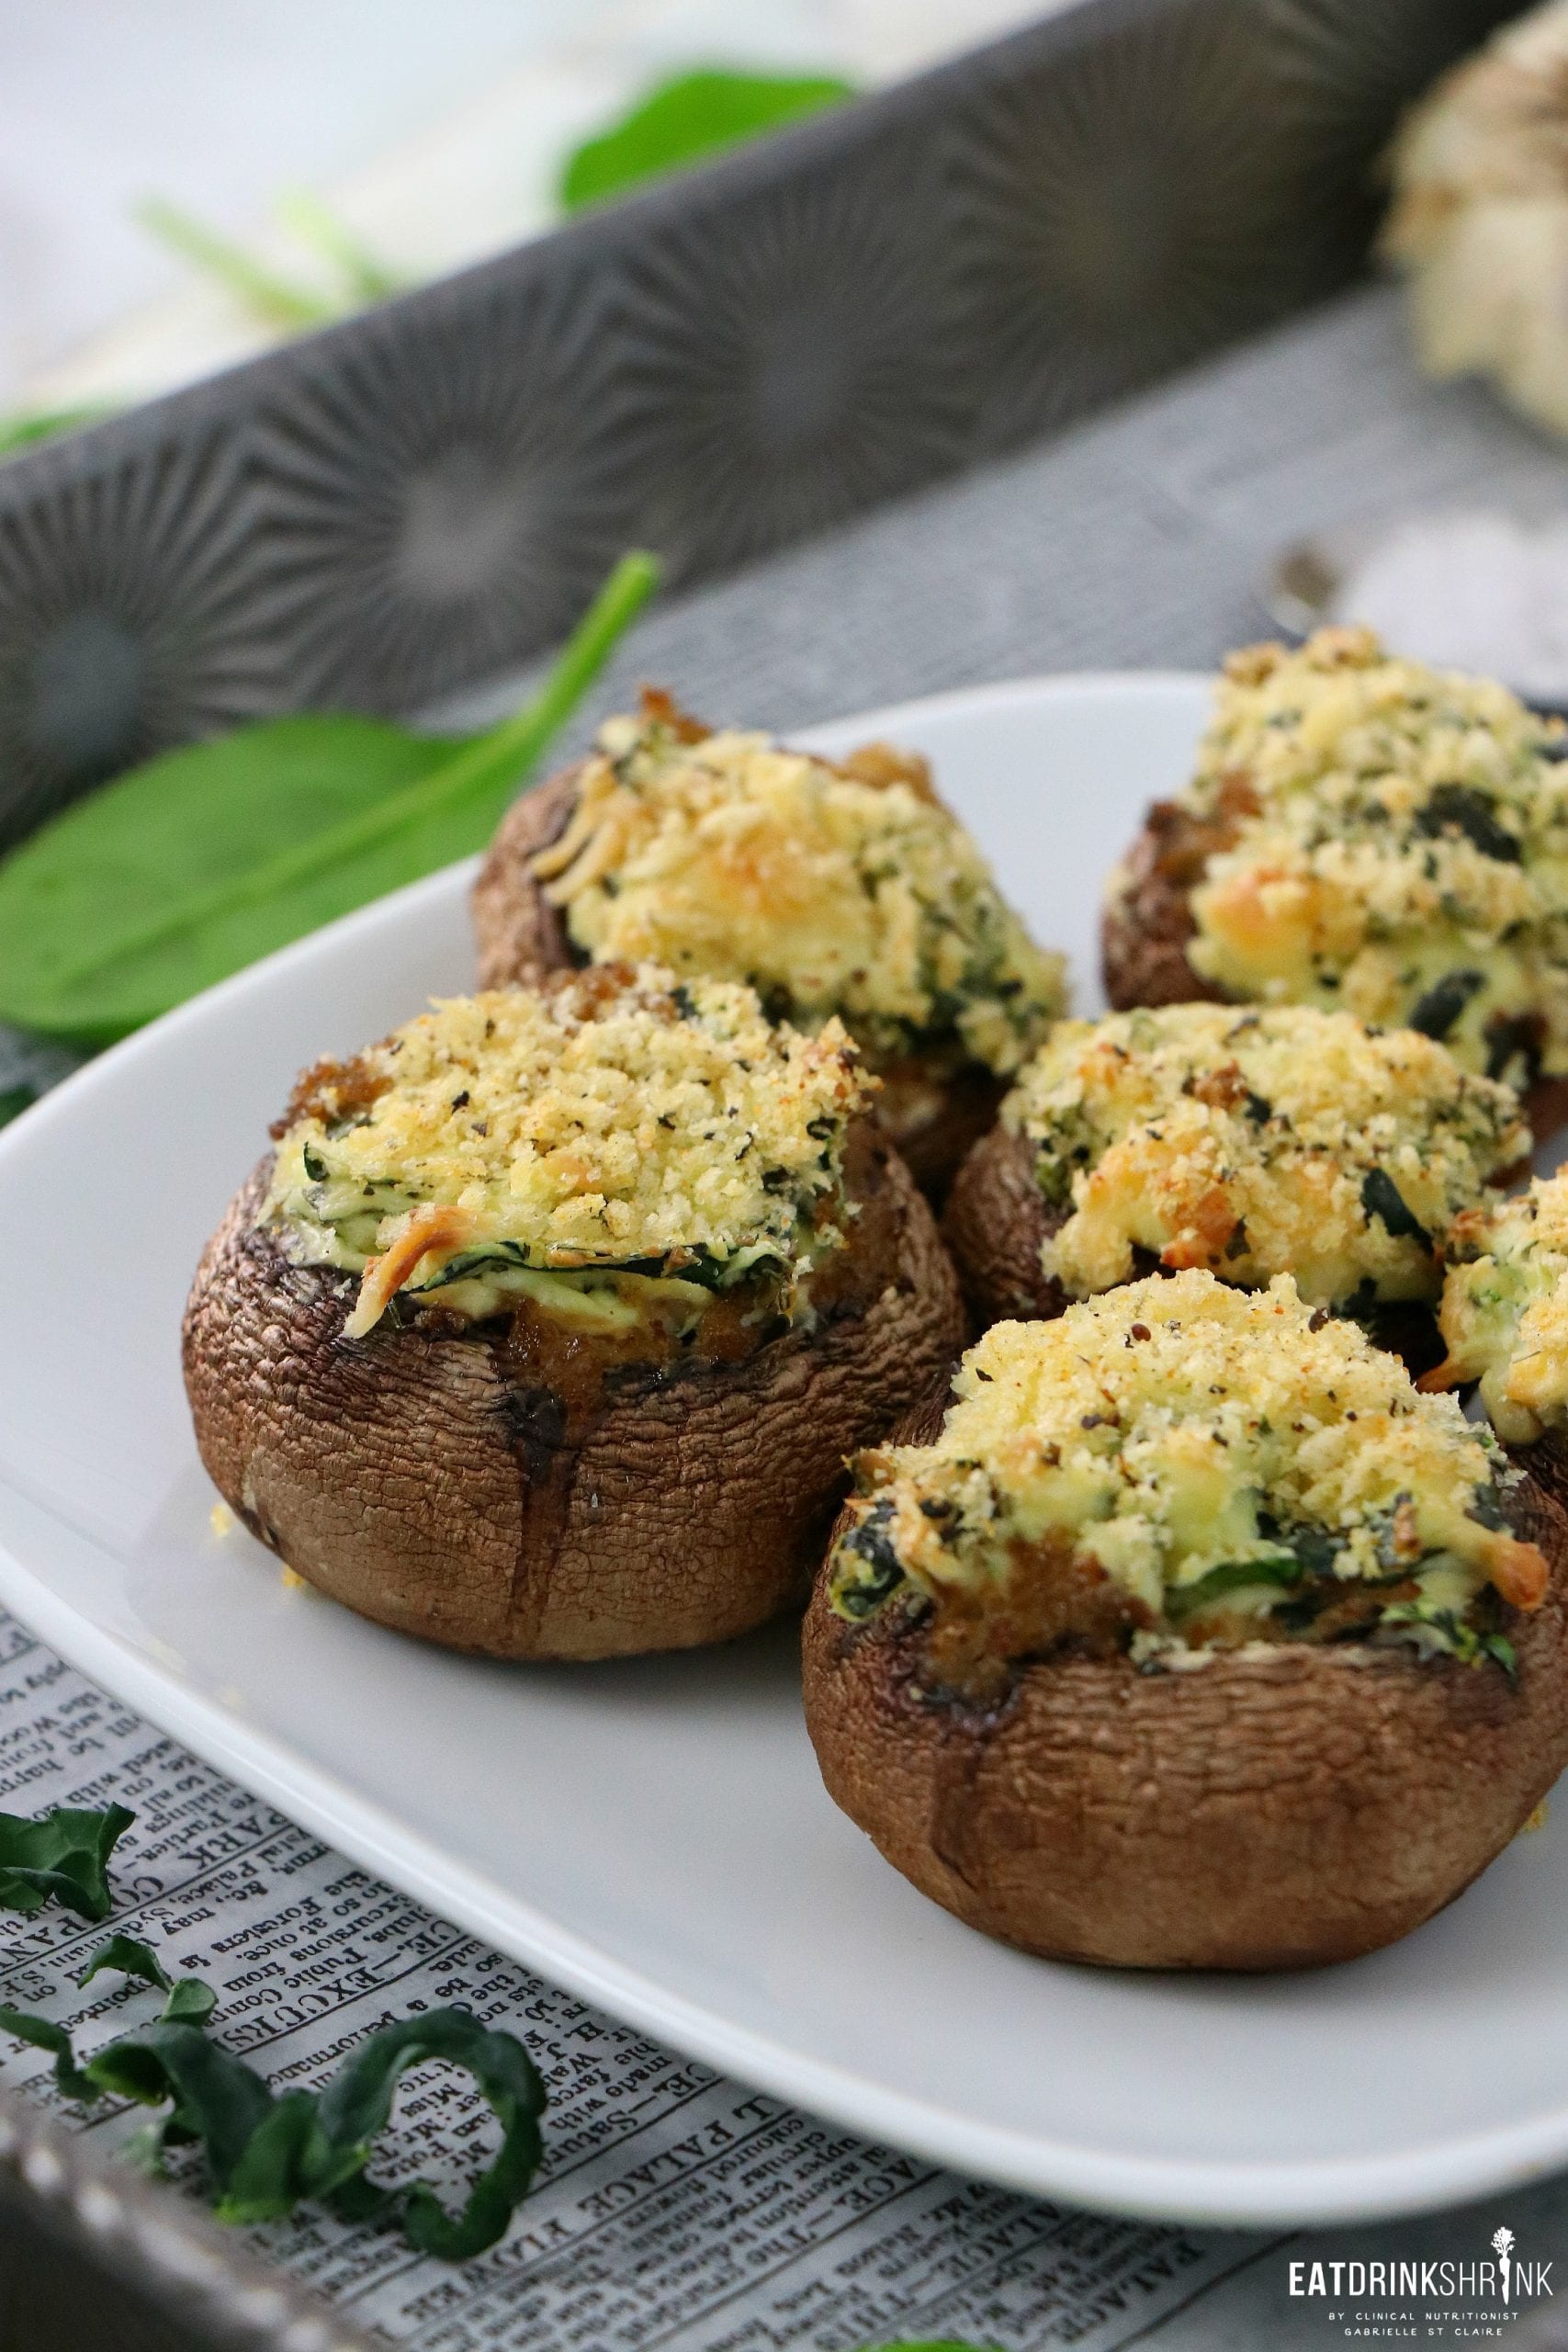 Vegan Spinach and Kale Stuffed Mushrooms